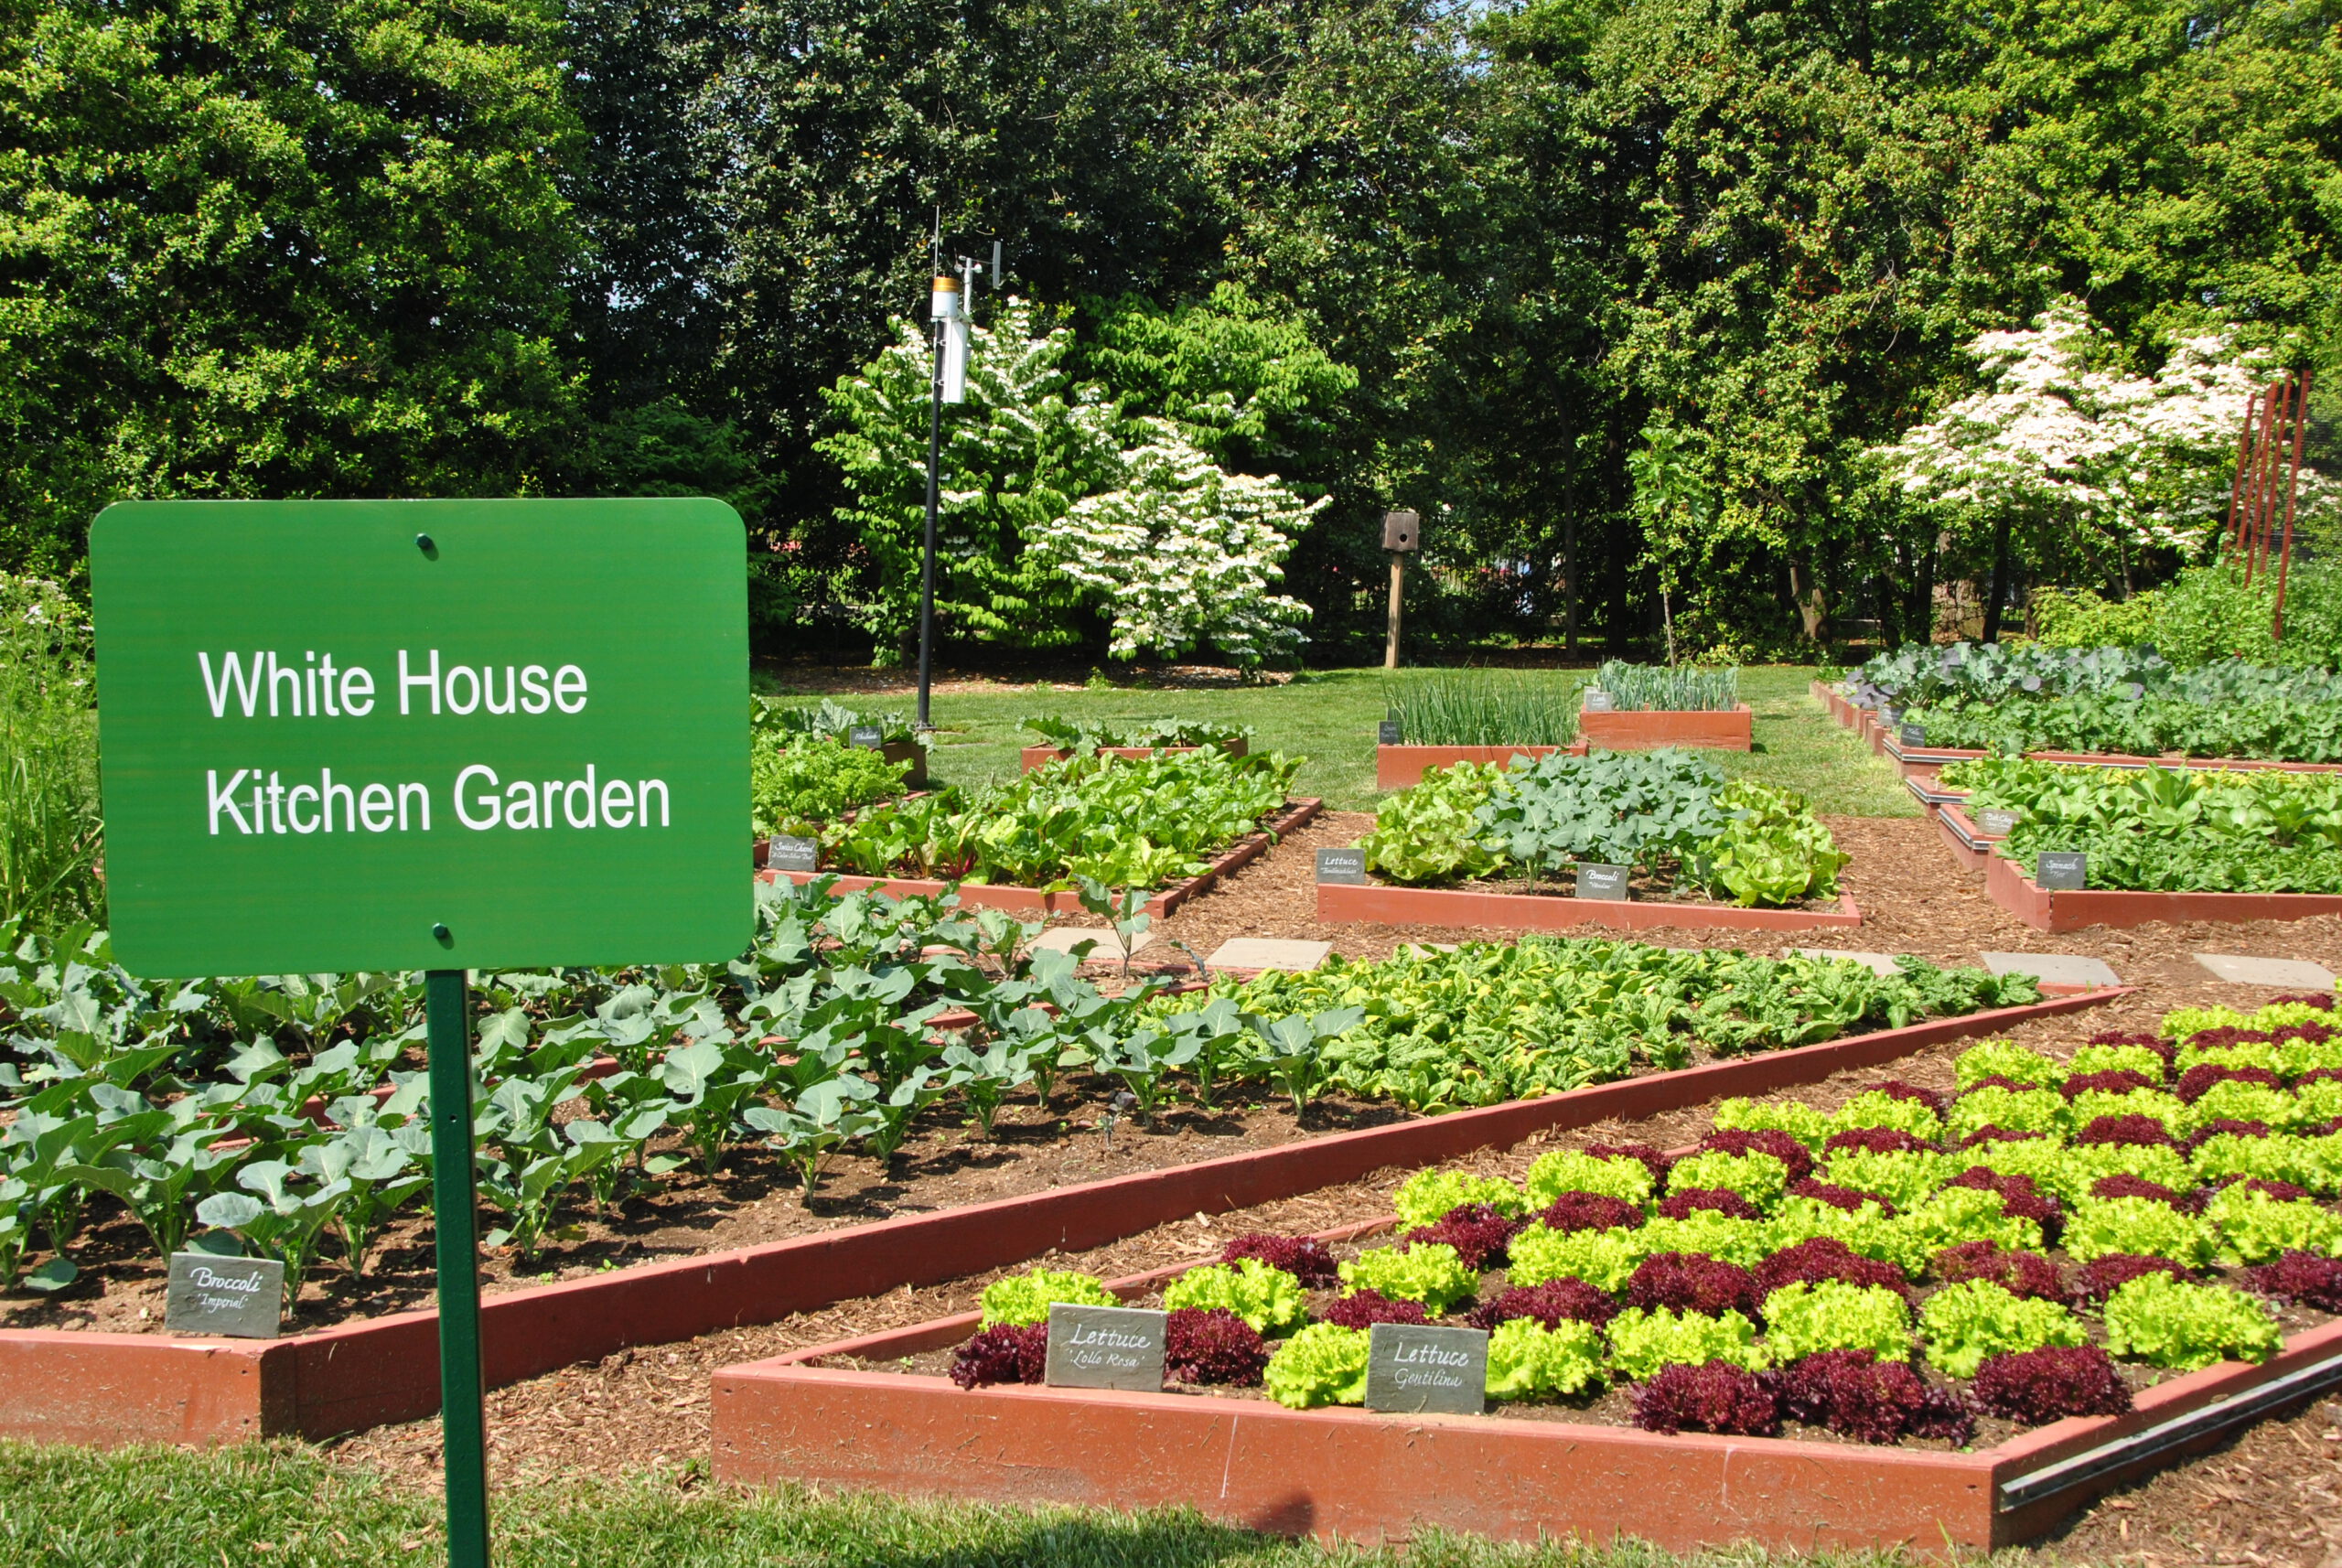 A view of Michelle Obama's White House kitchen  garden